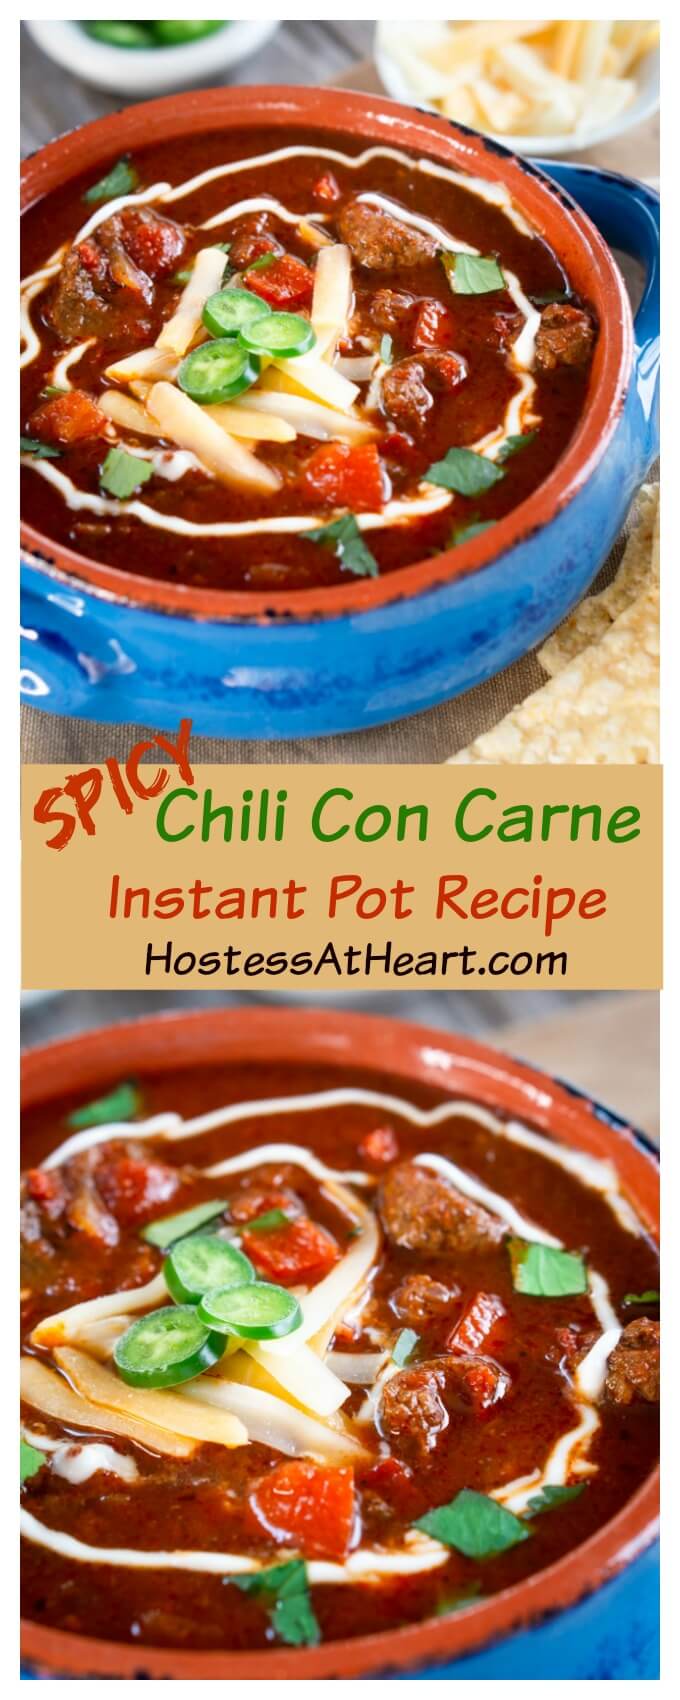 Spicy Chili Con Carne (Easy Instant Pot Recipe) - Hostess At Heart